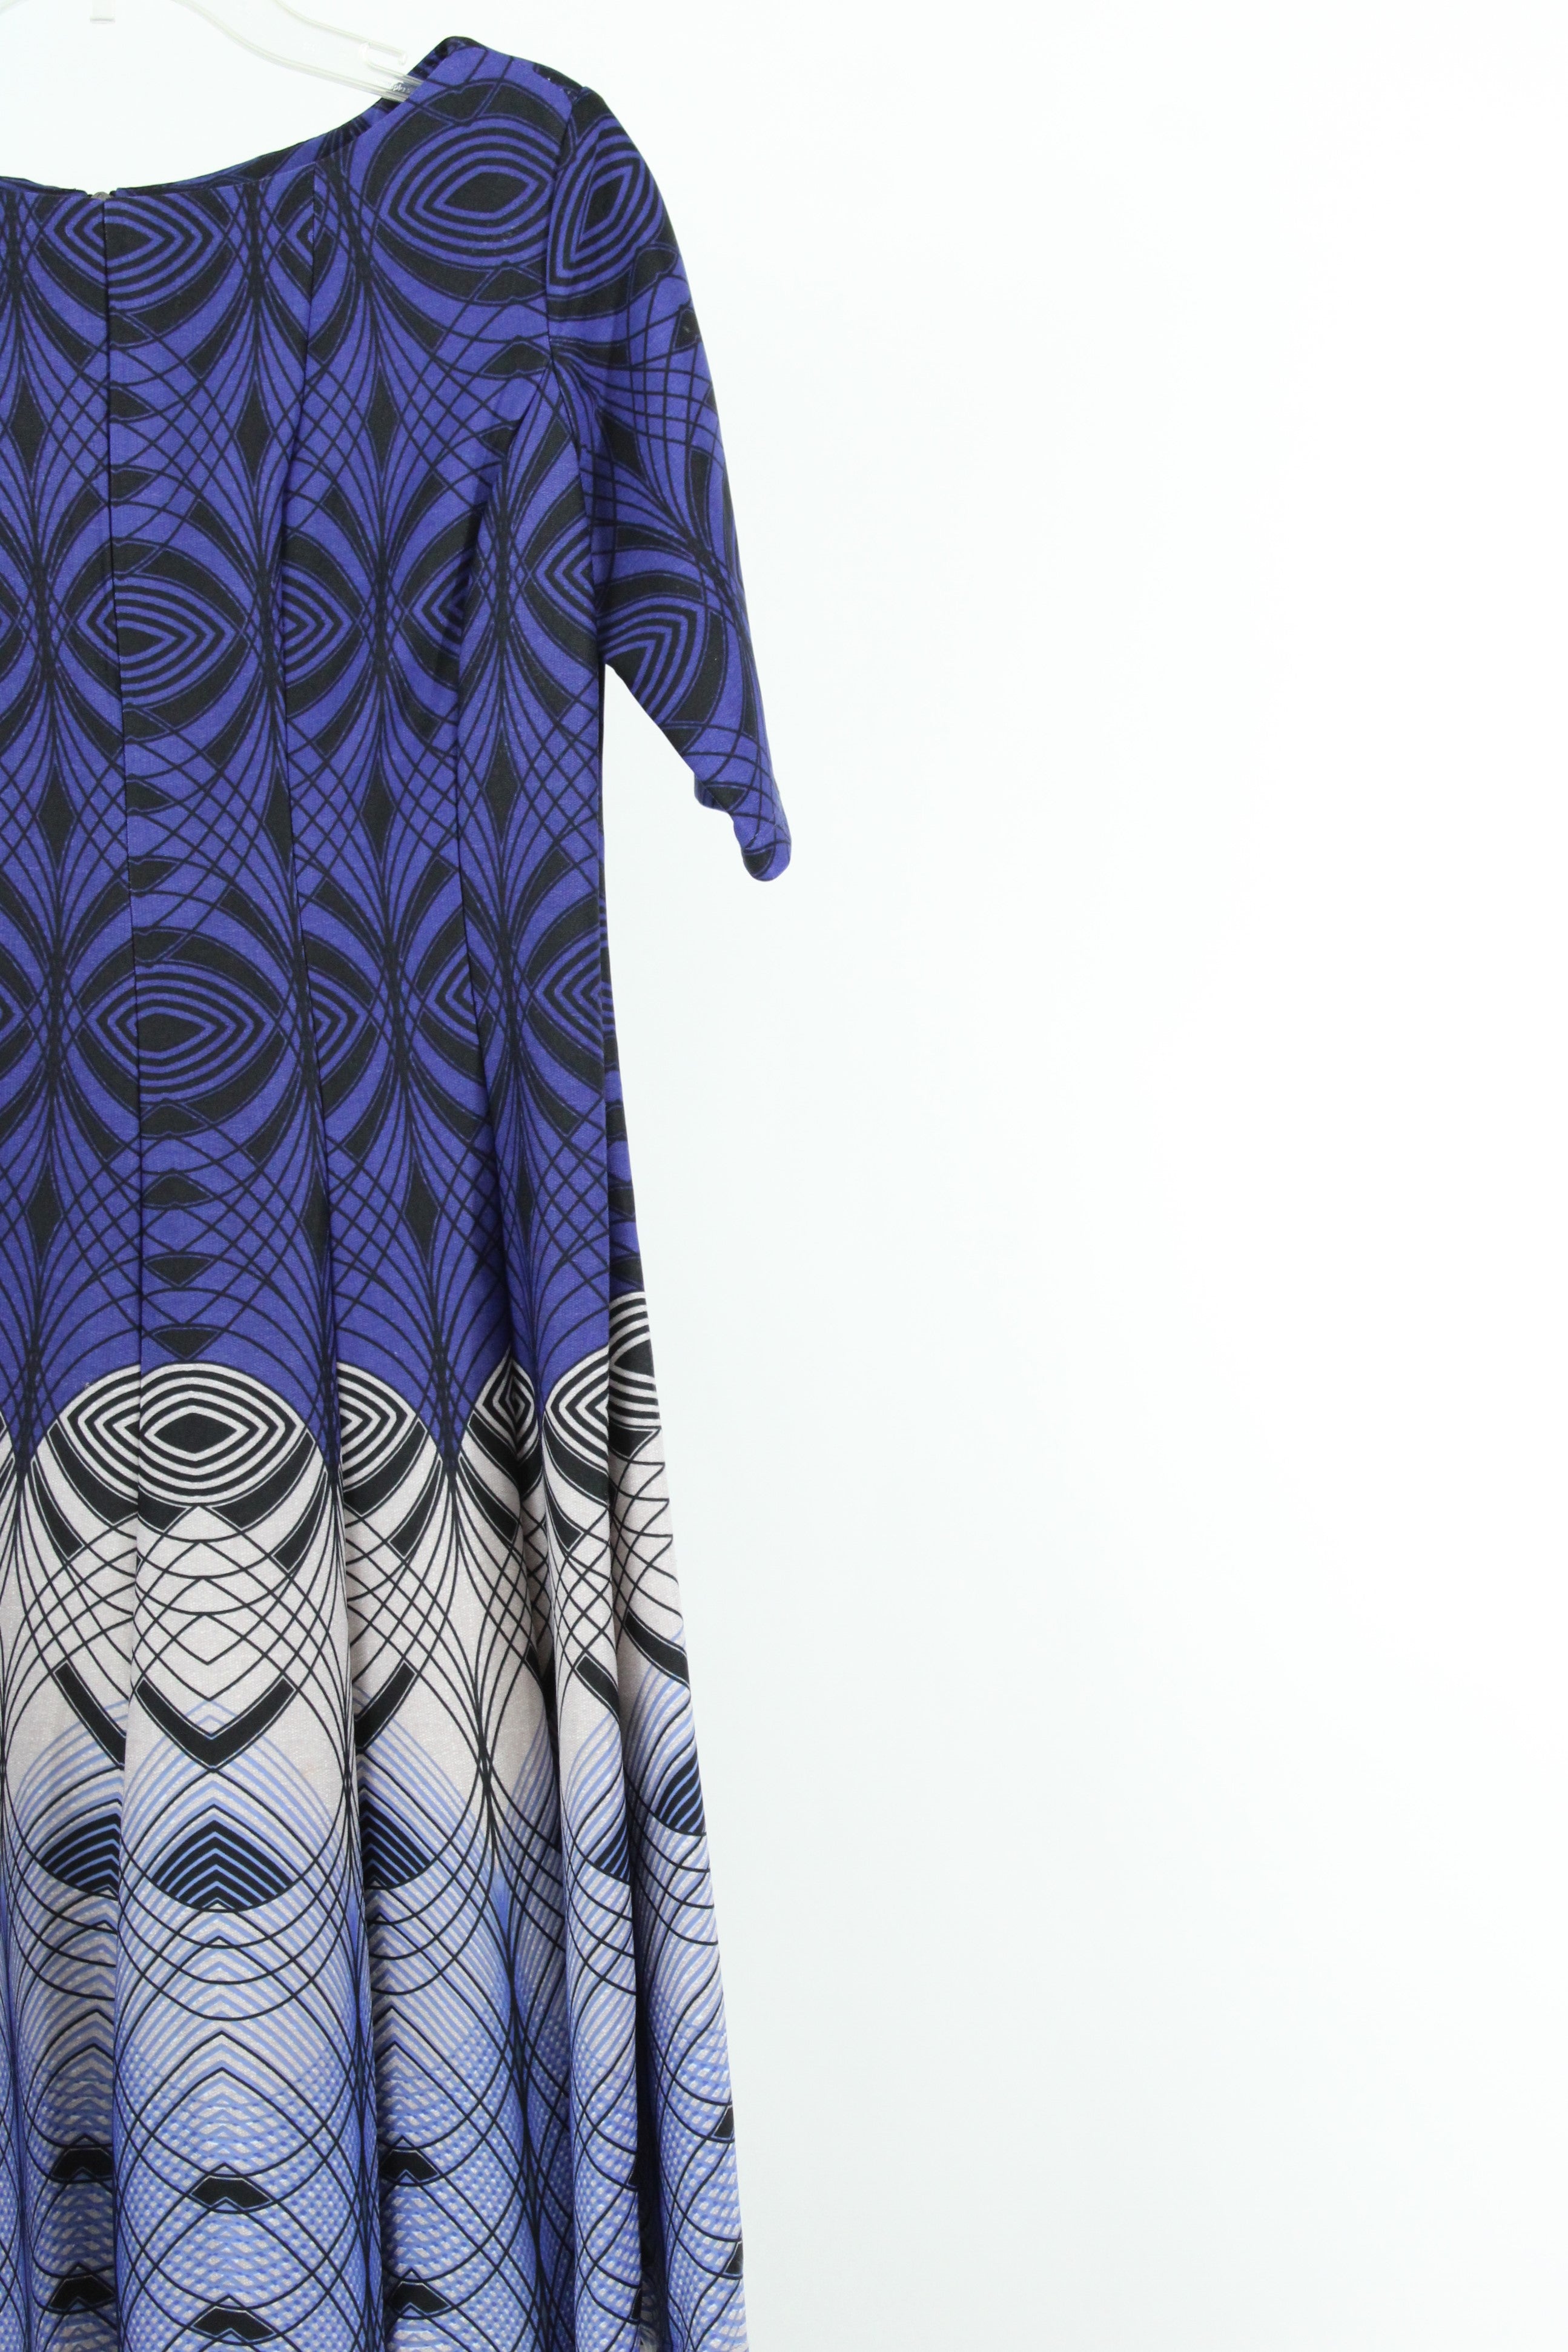 Gabby Skye Blue Patterned Dress | 8